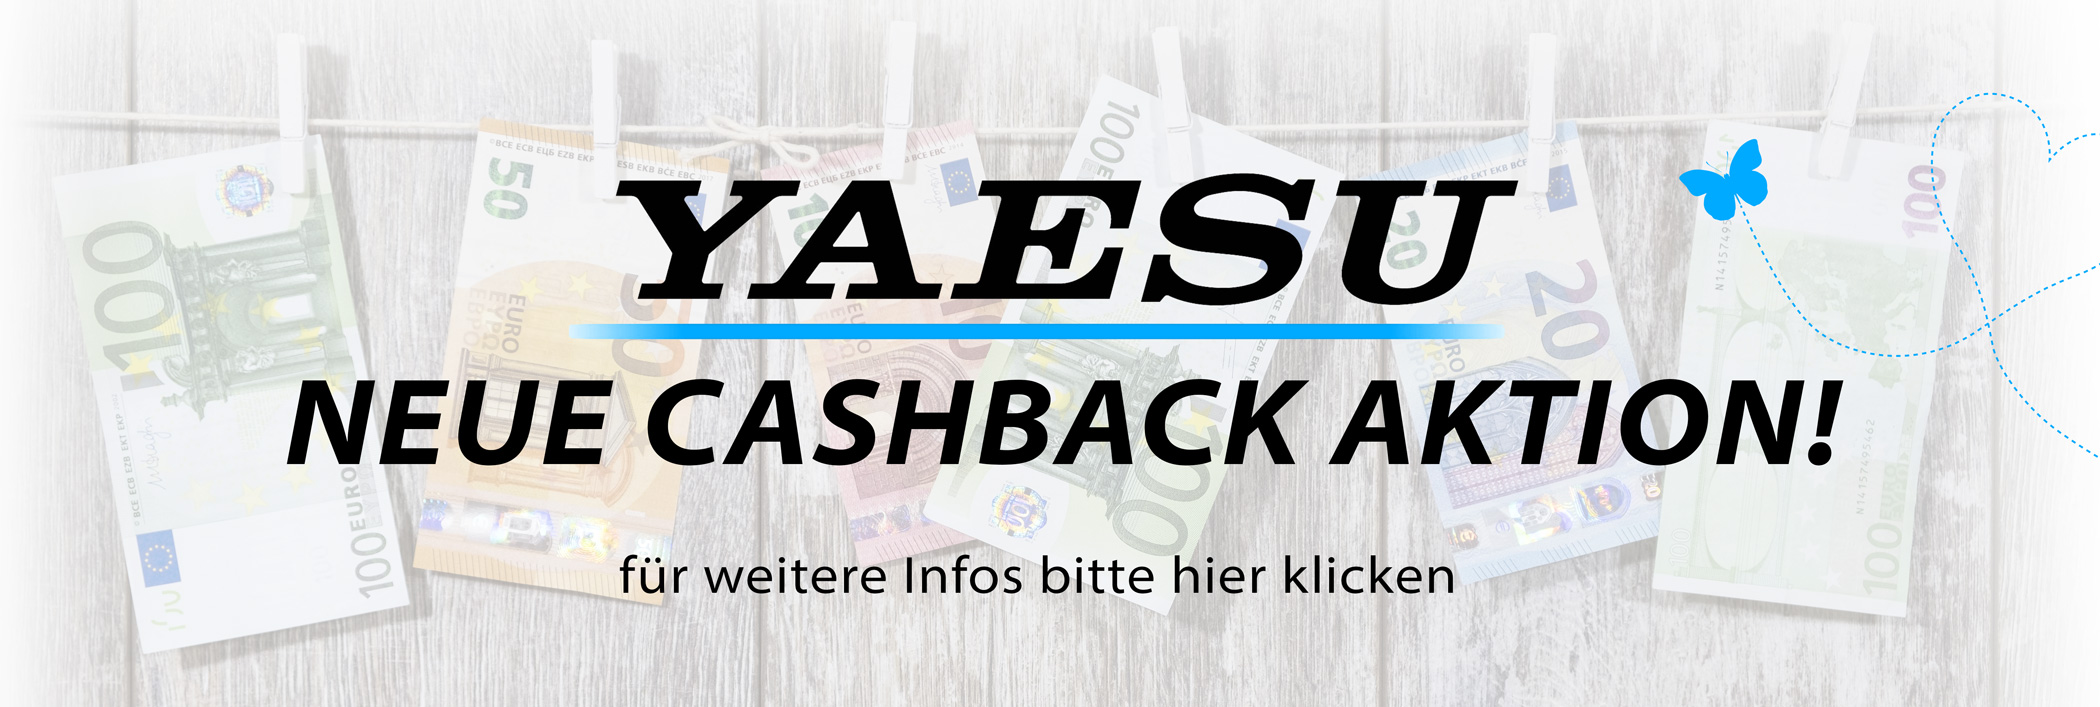 Cashback-Aktion